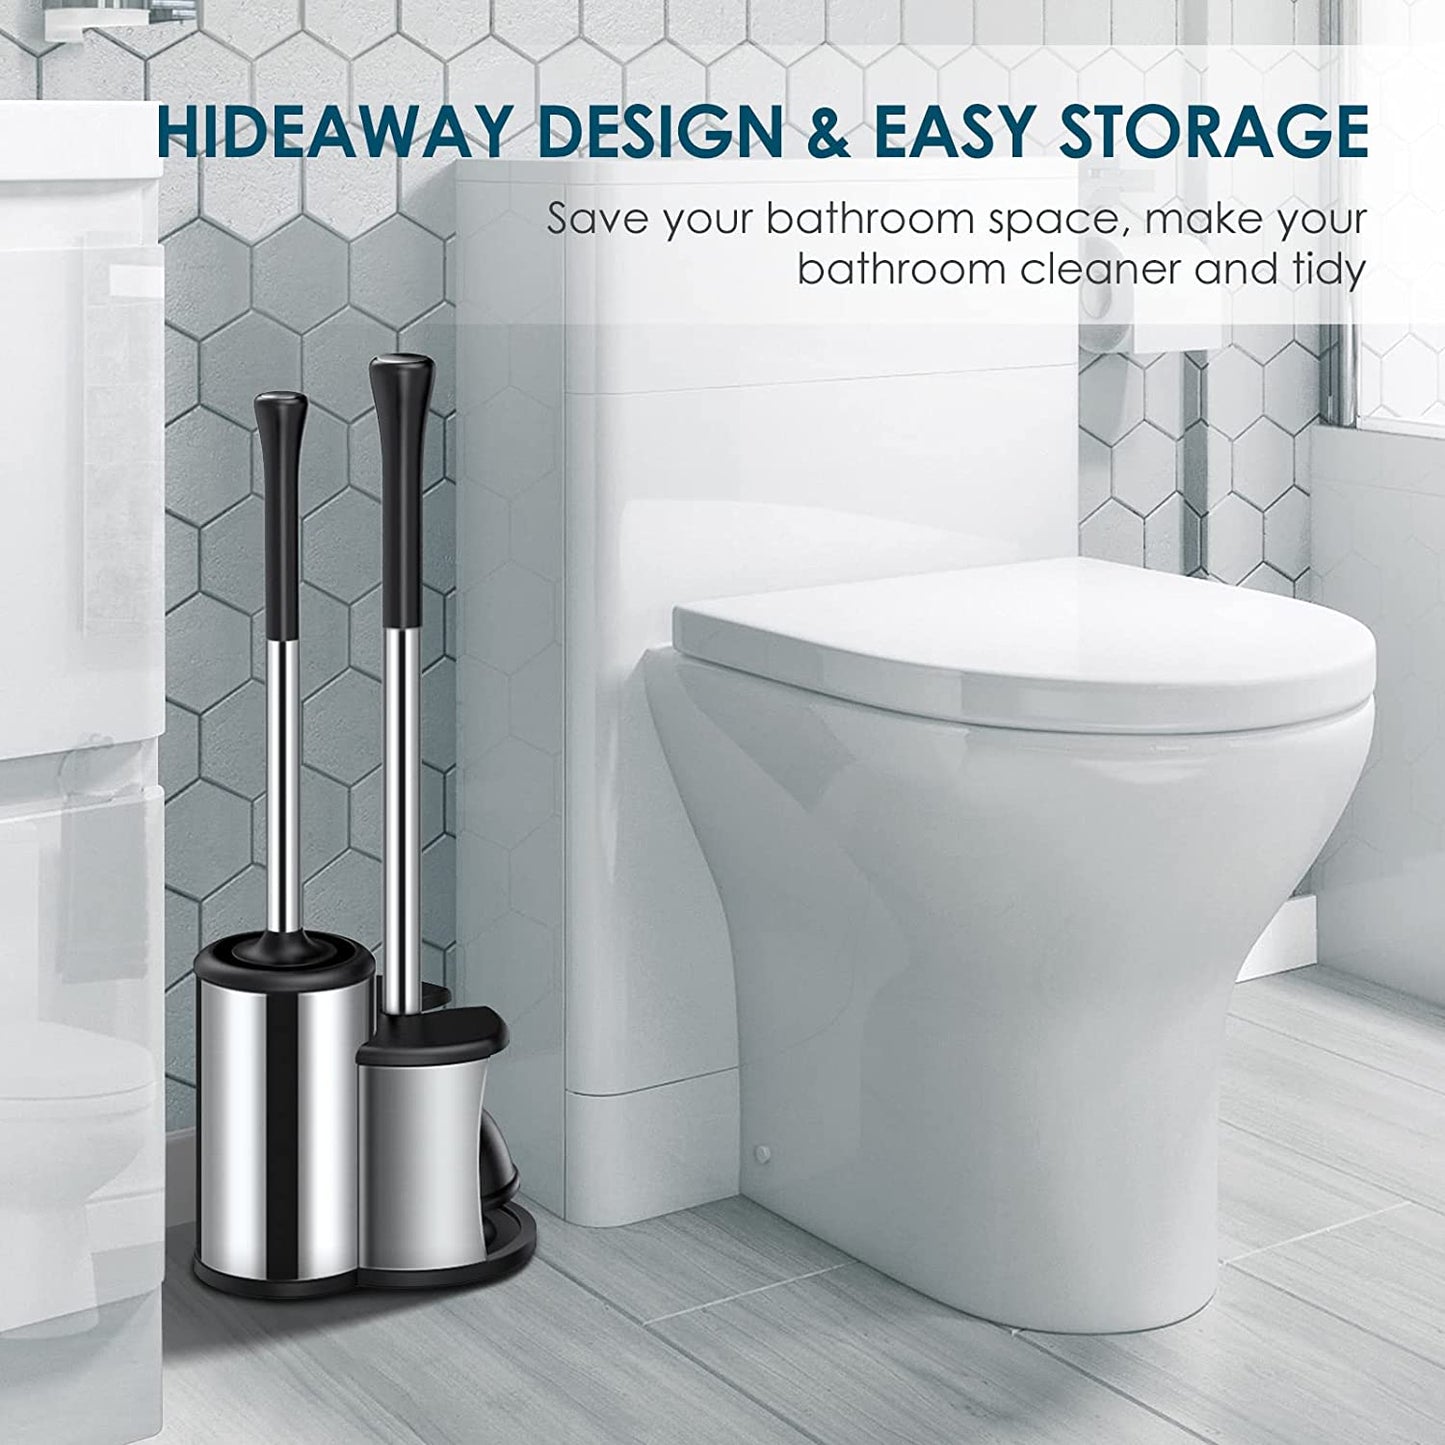 Toilet Plunger Bowl Brush Set: Hideaway Heavy Duty Toilet Plunger